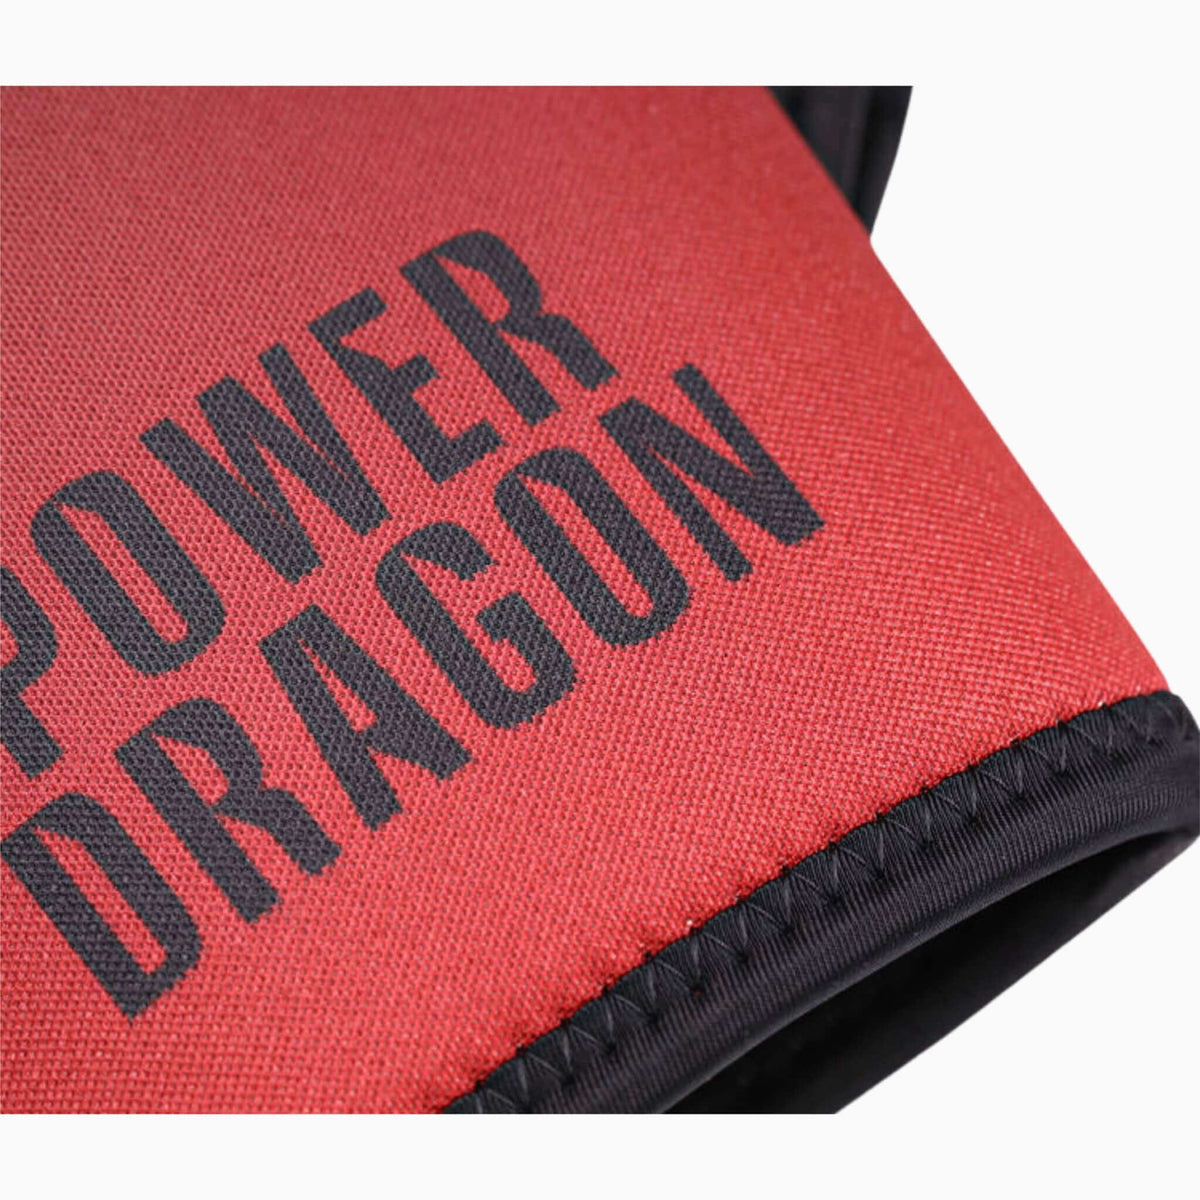 7mm POWER DRAGON "KNEE SLEEVE" [DEEP RED] - DRAGON SERIES - Akinci Strength